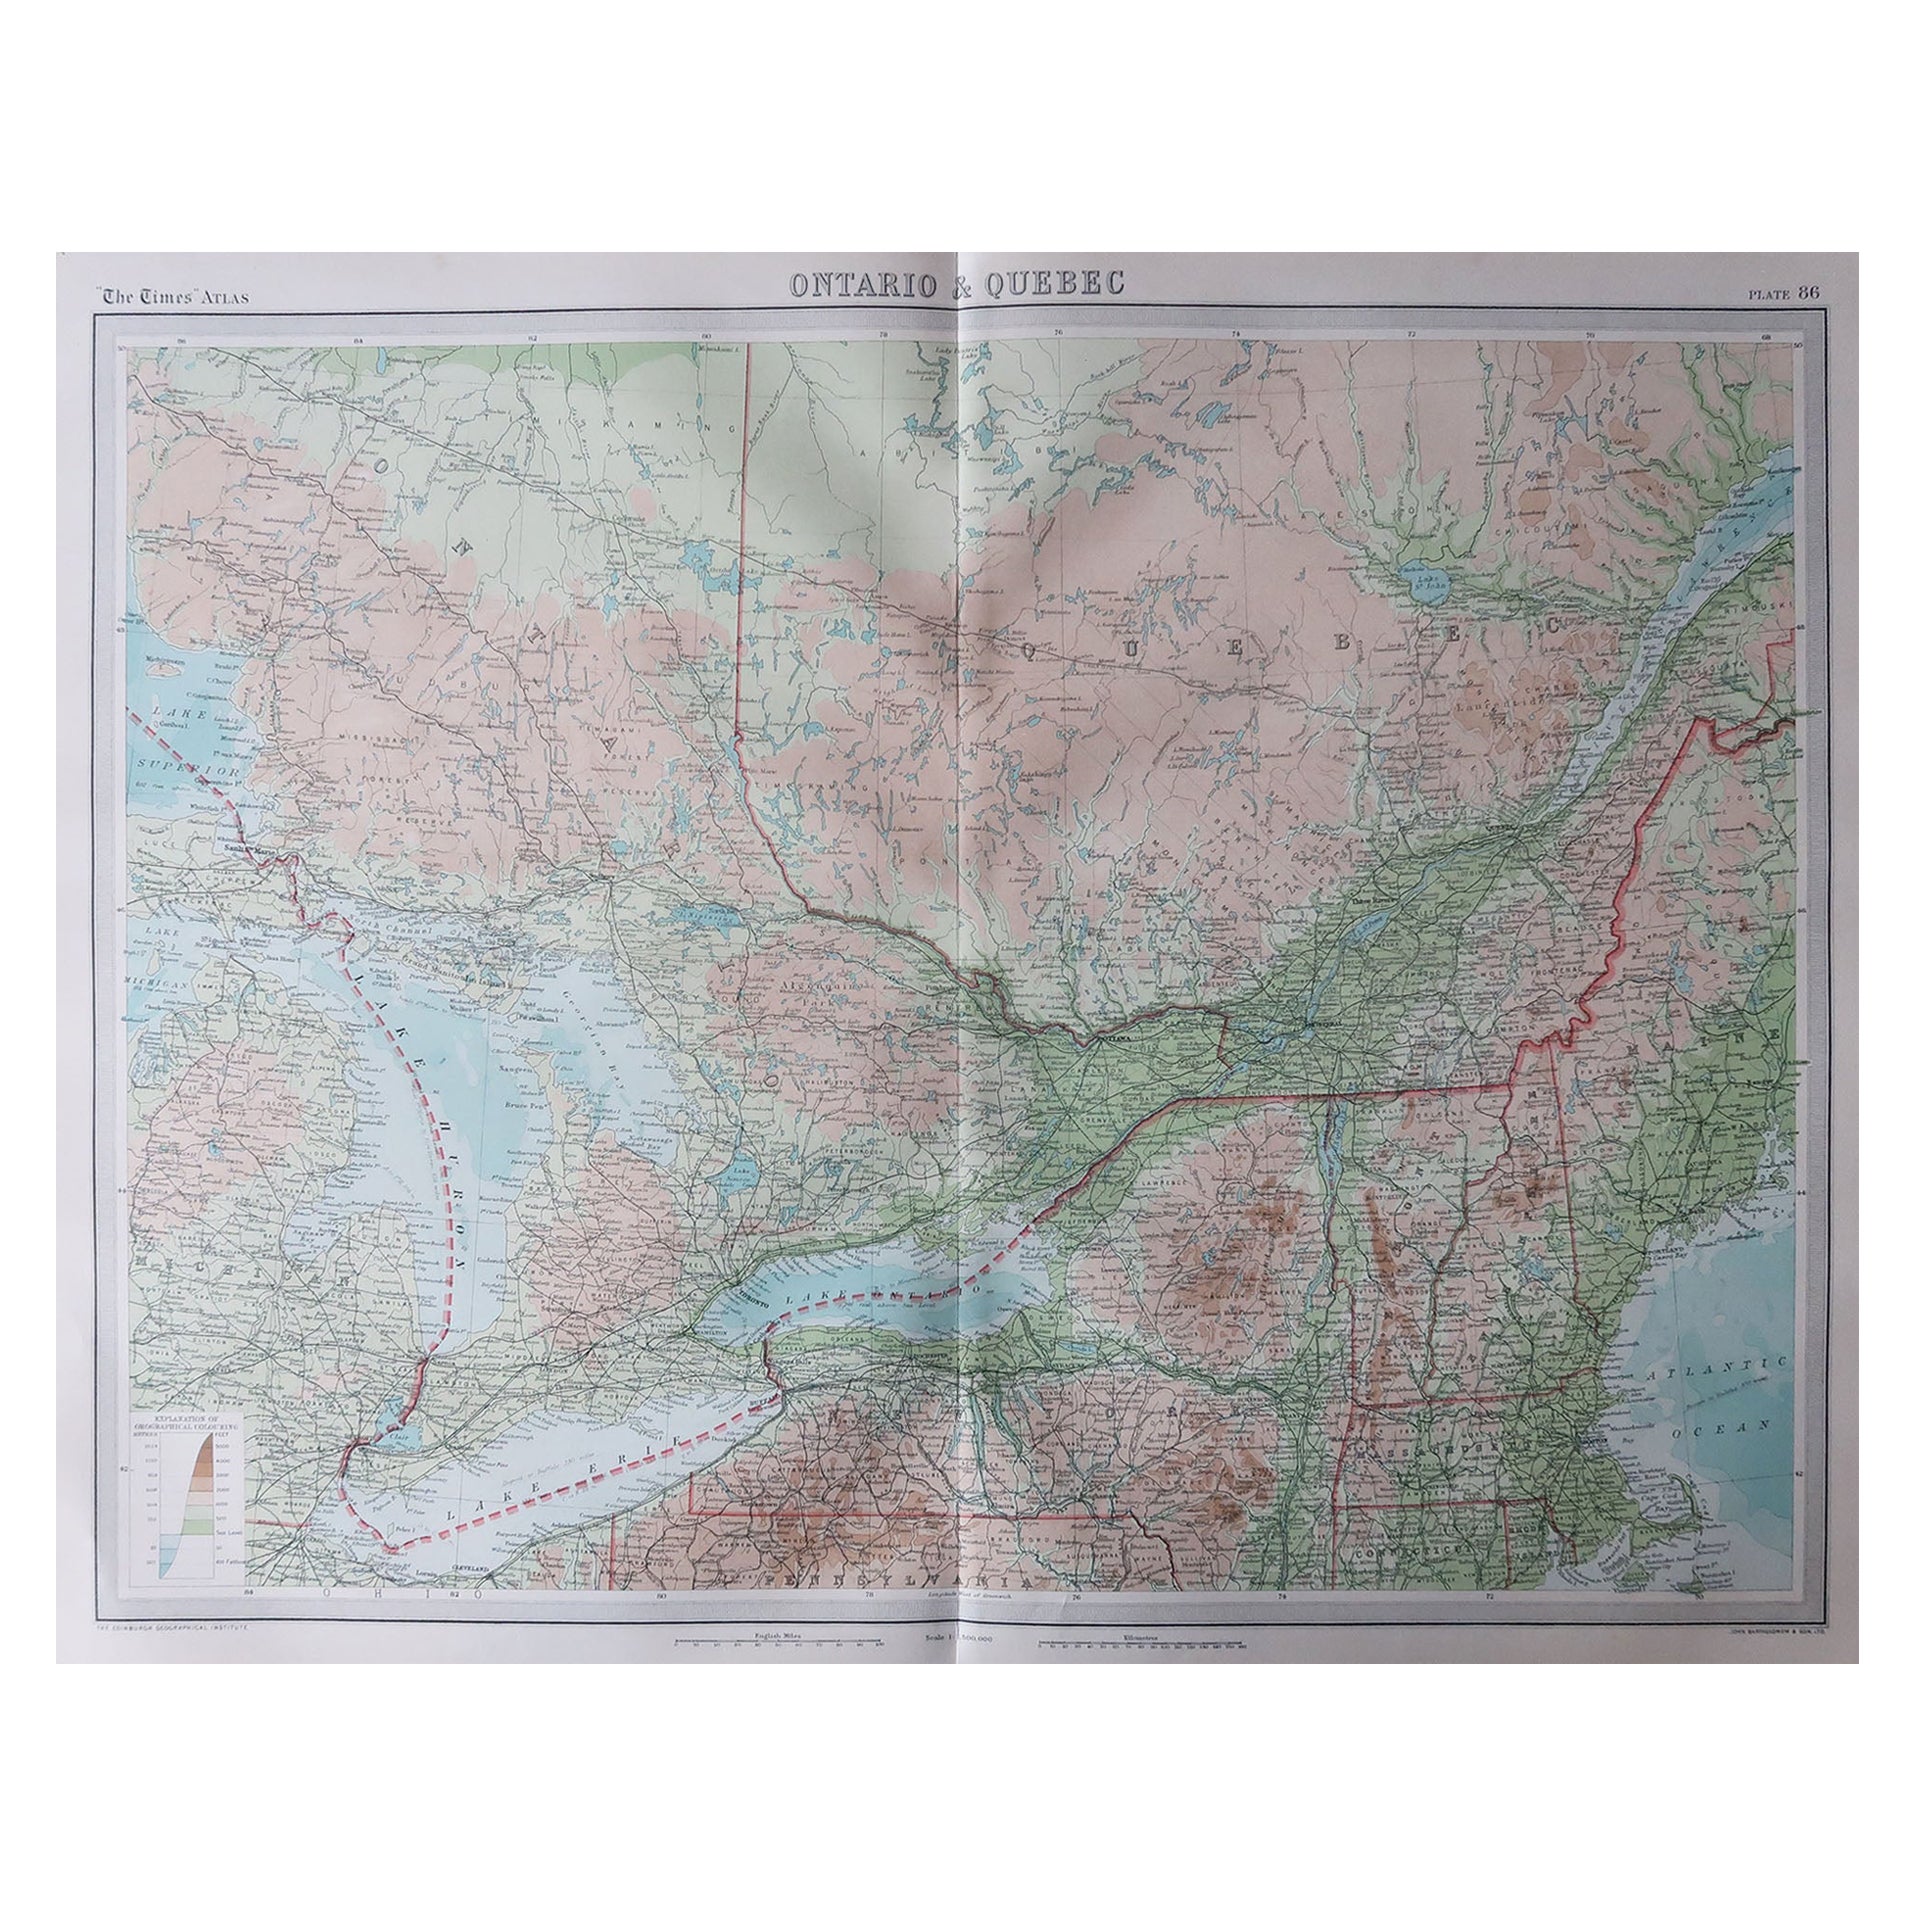 Große Original-Vintage-Karte der Großen Seen, Kanada, ca. 1920